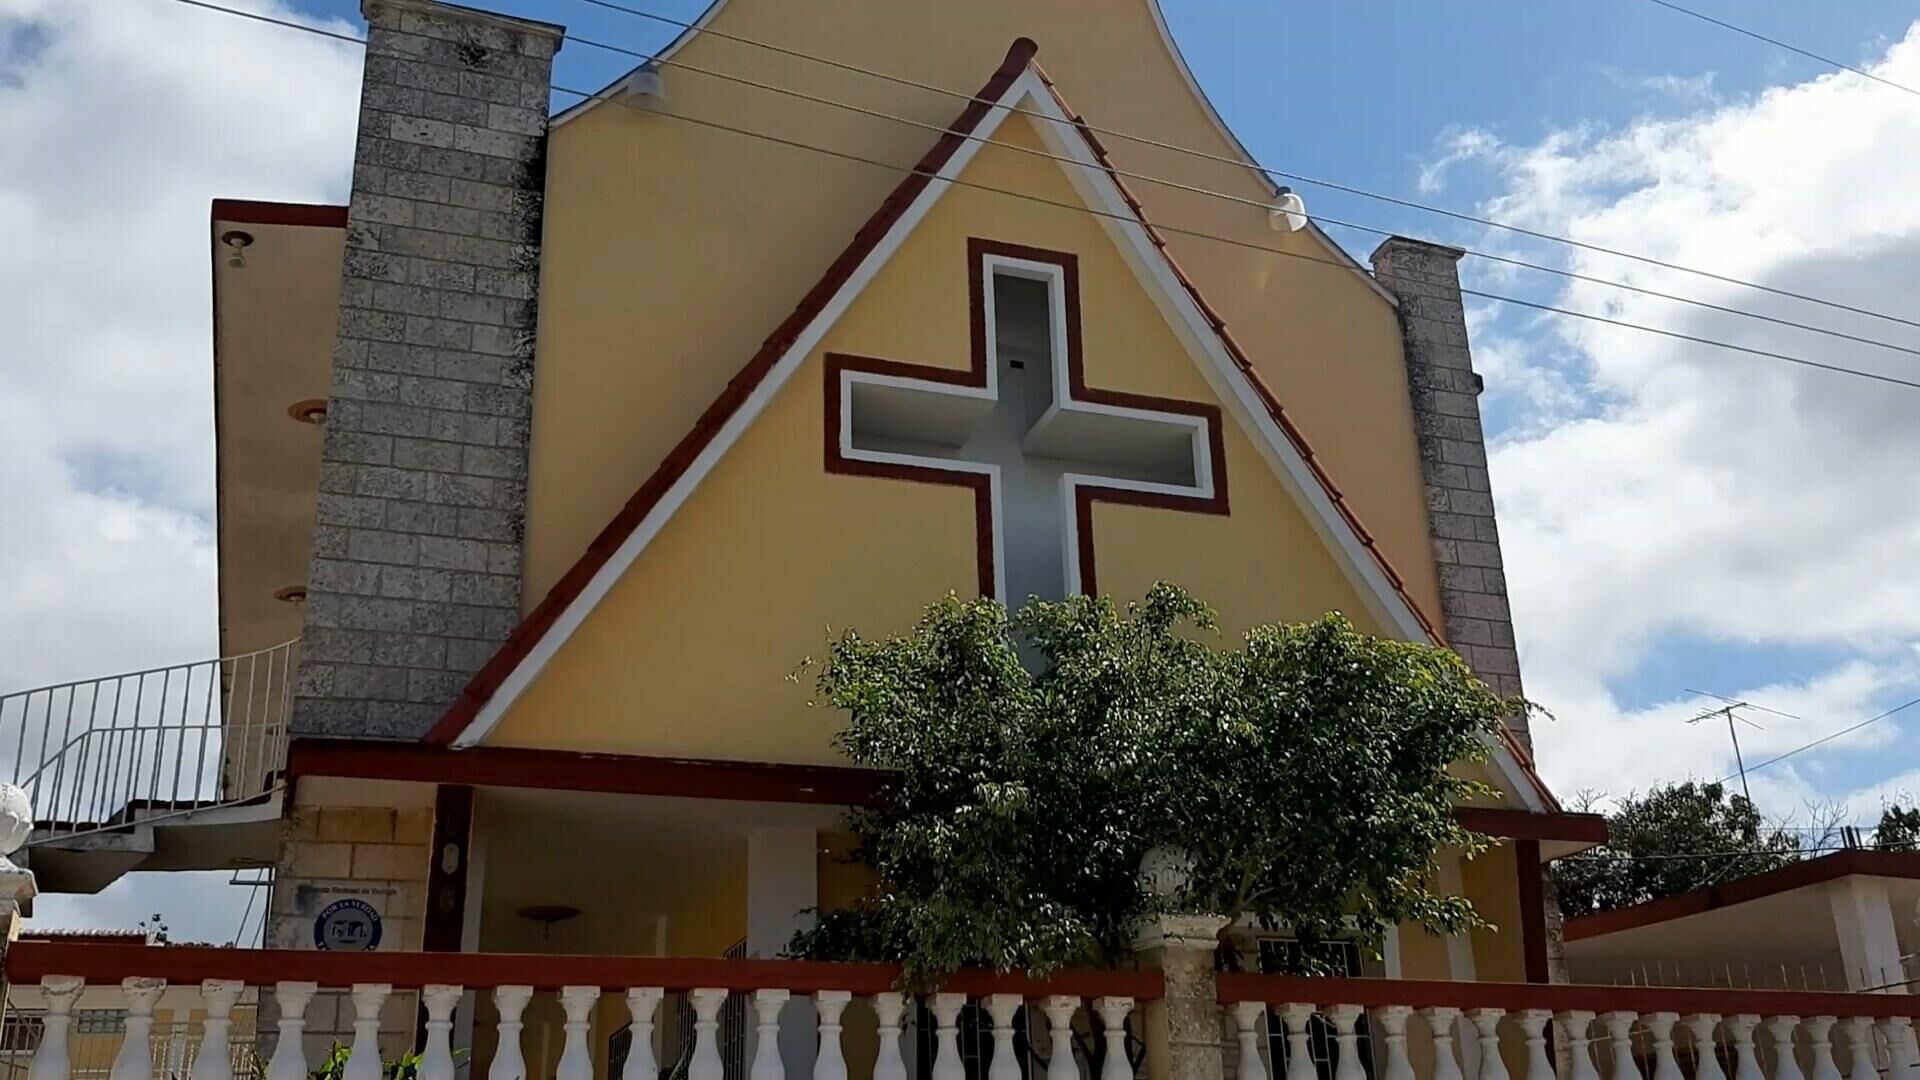 Iglesia Bando de Gedeón, Cuba  - Sputnik Mundo, 1920, 22.02.2021